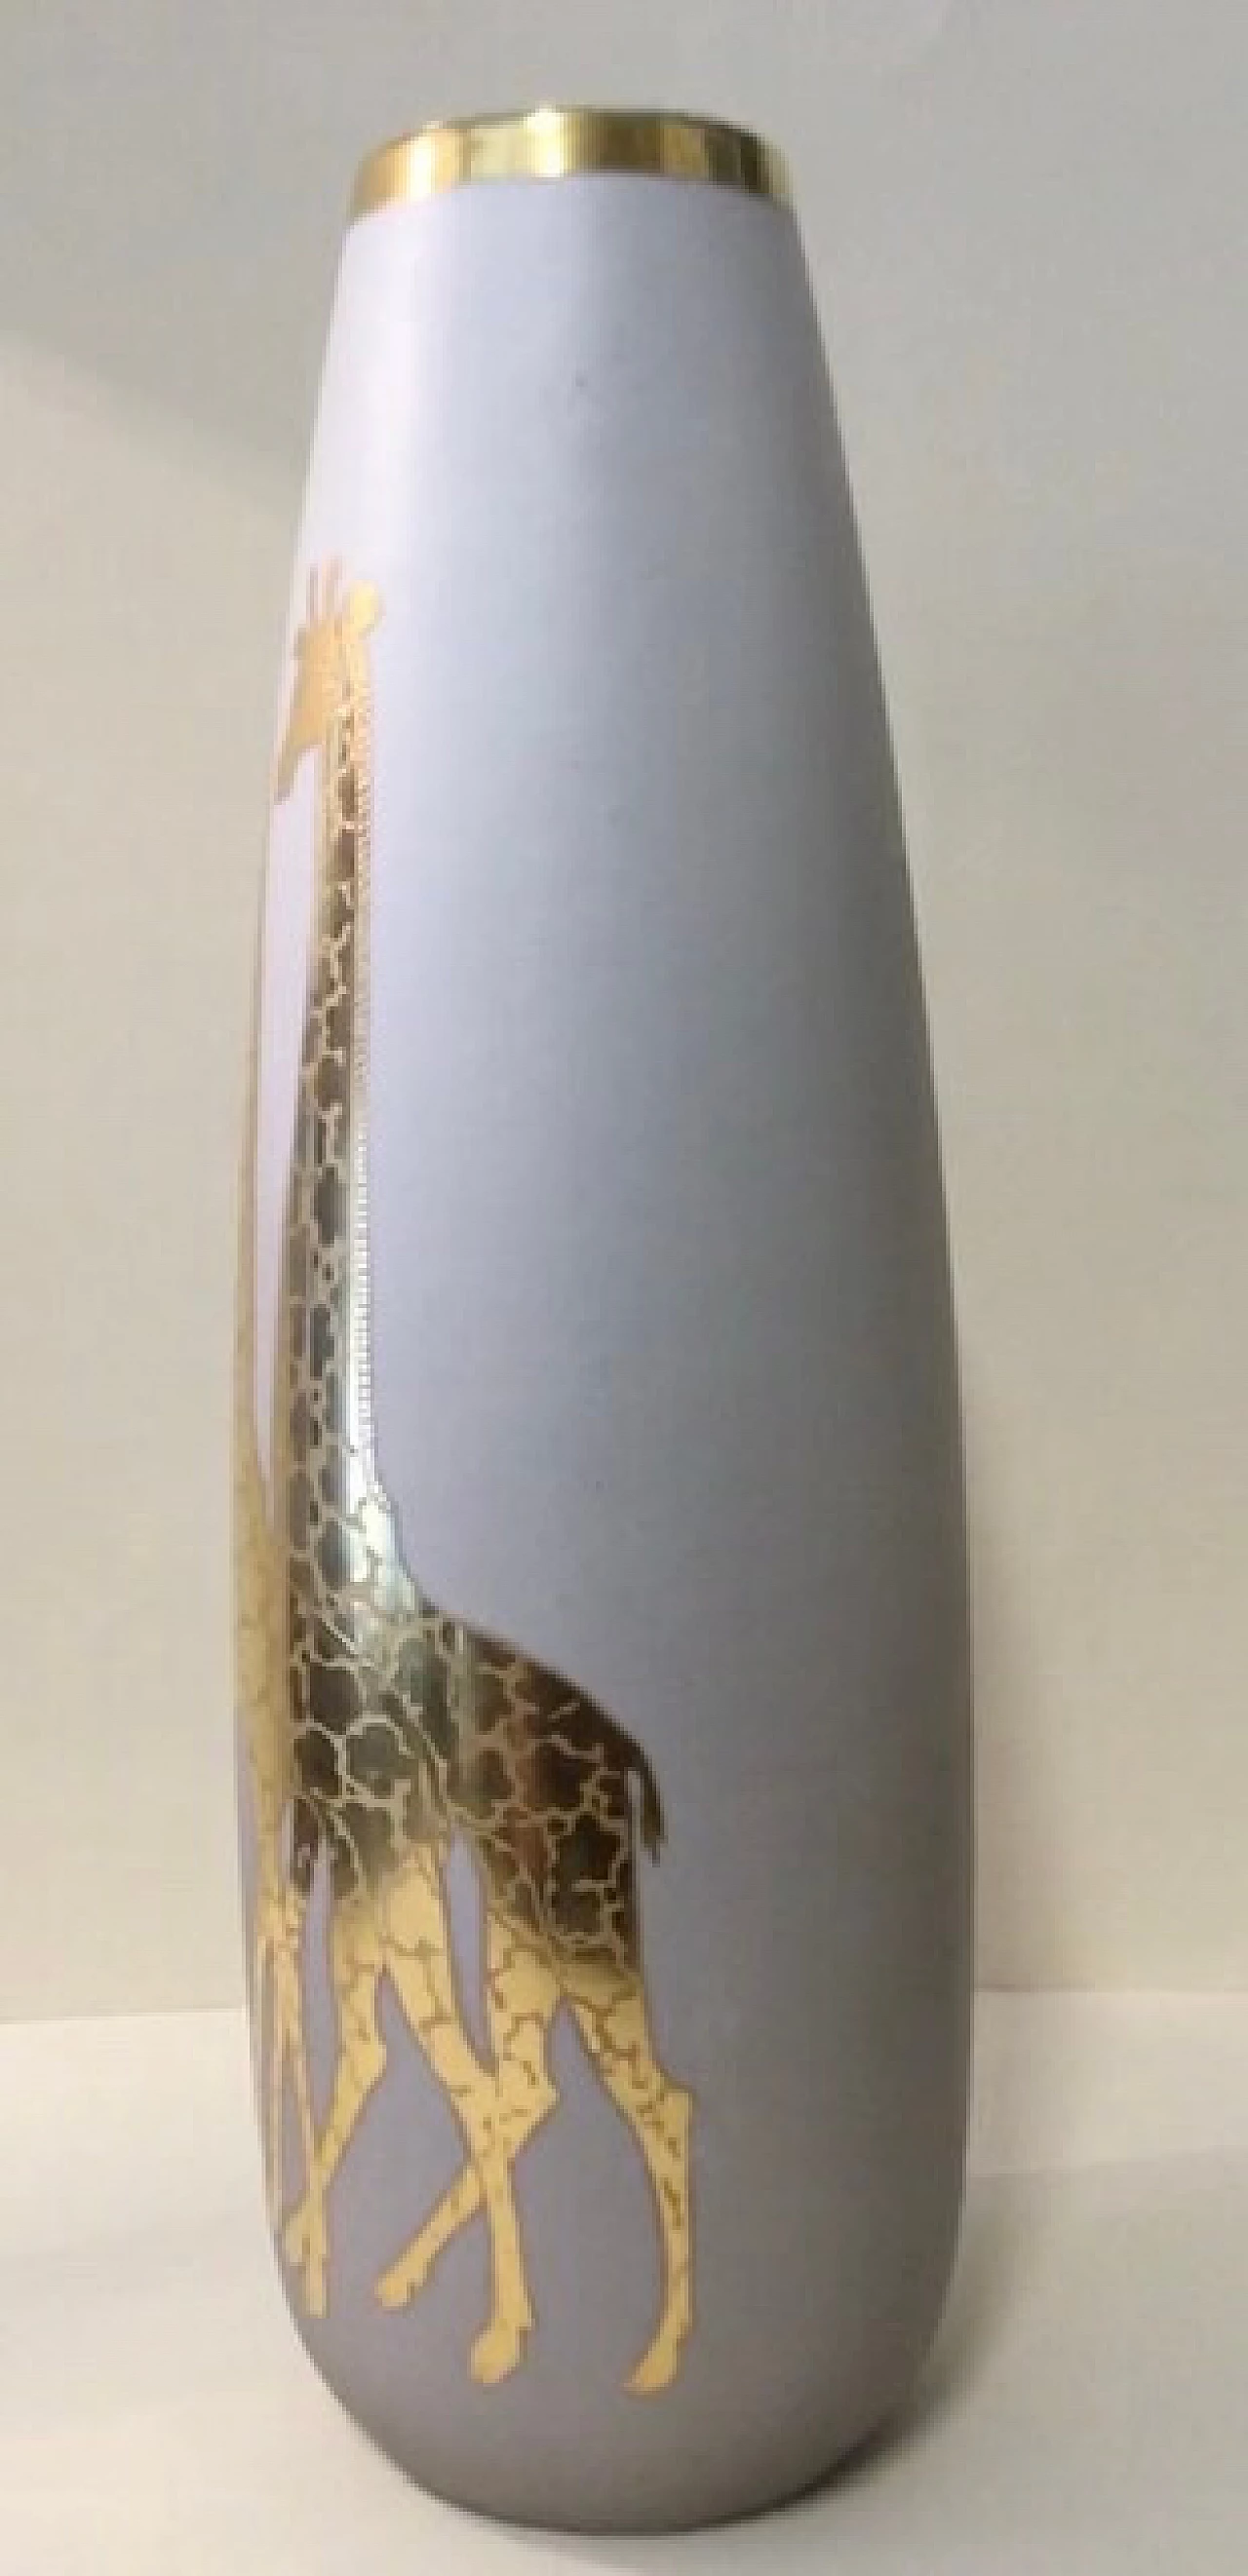 Porcelain vase with giraffes, Finzi 1092529